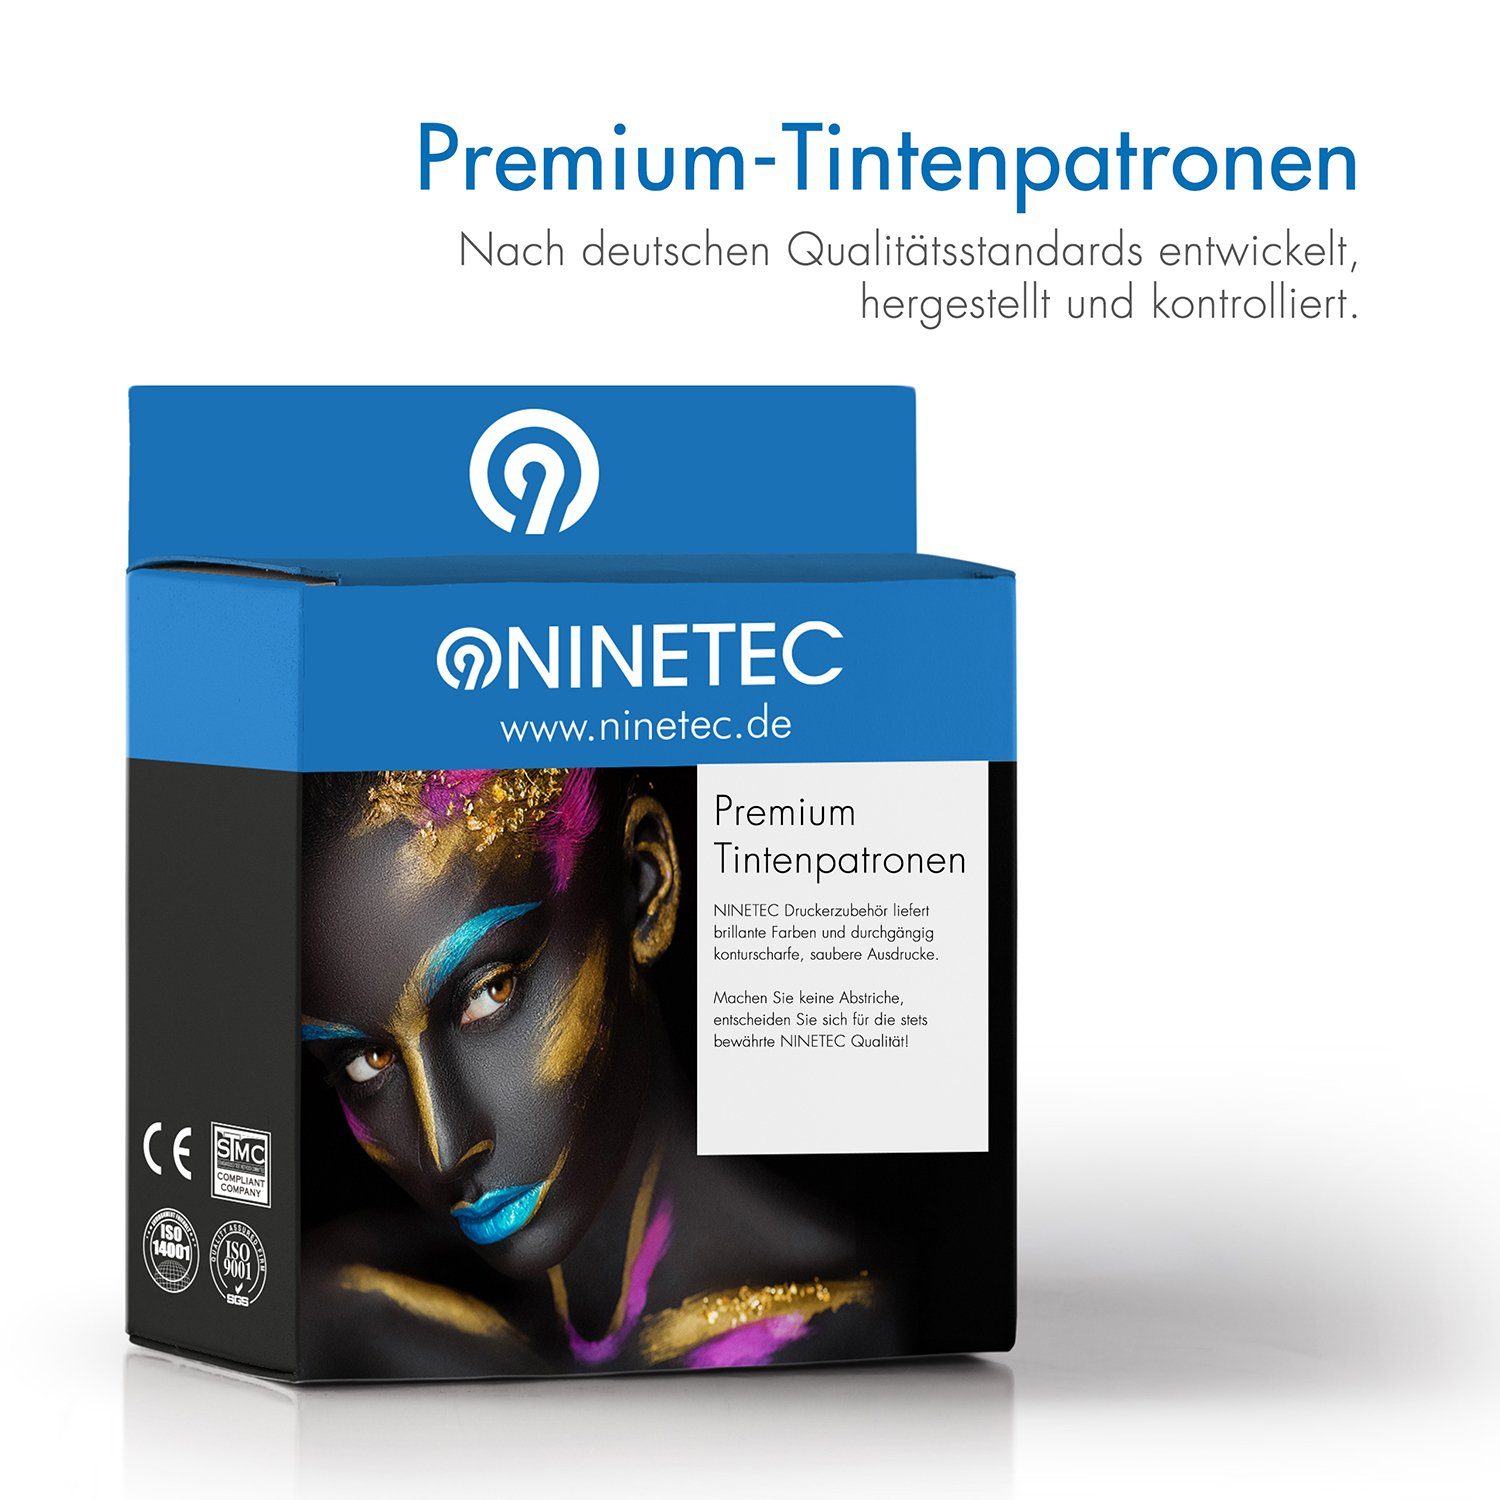 NINETEC 5er Set LC-3233 Tintenpatrone ersetzt Brother 3233XL